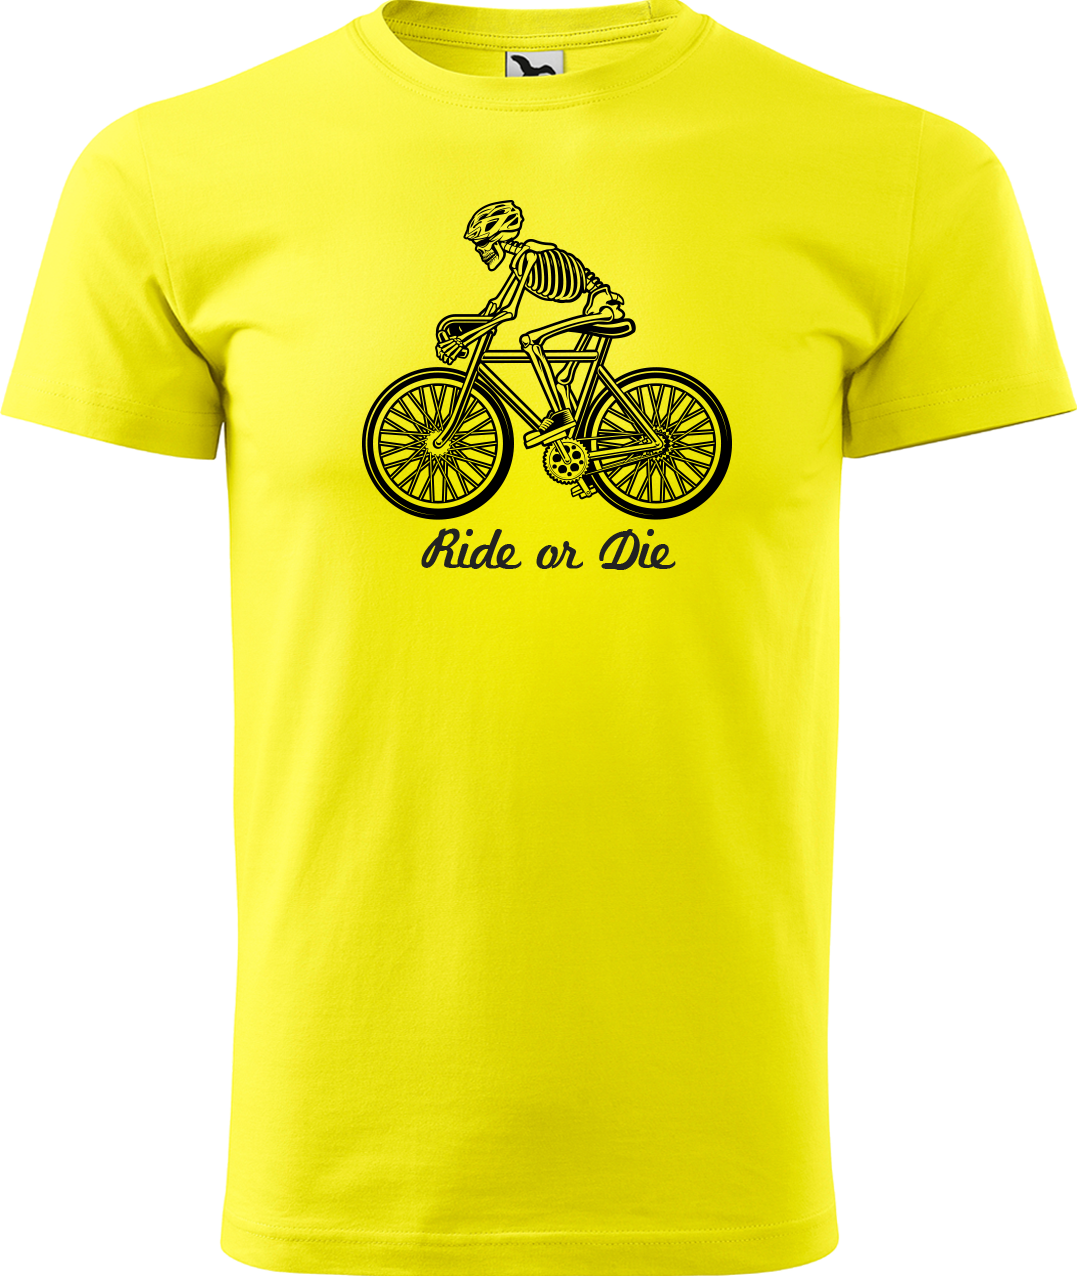 Pánské tričko pro cyklistu - Ride or Die Velikost: XL, Barva: Žlutá (04)